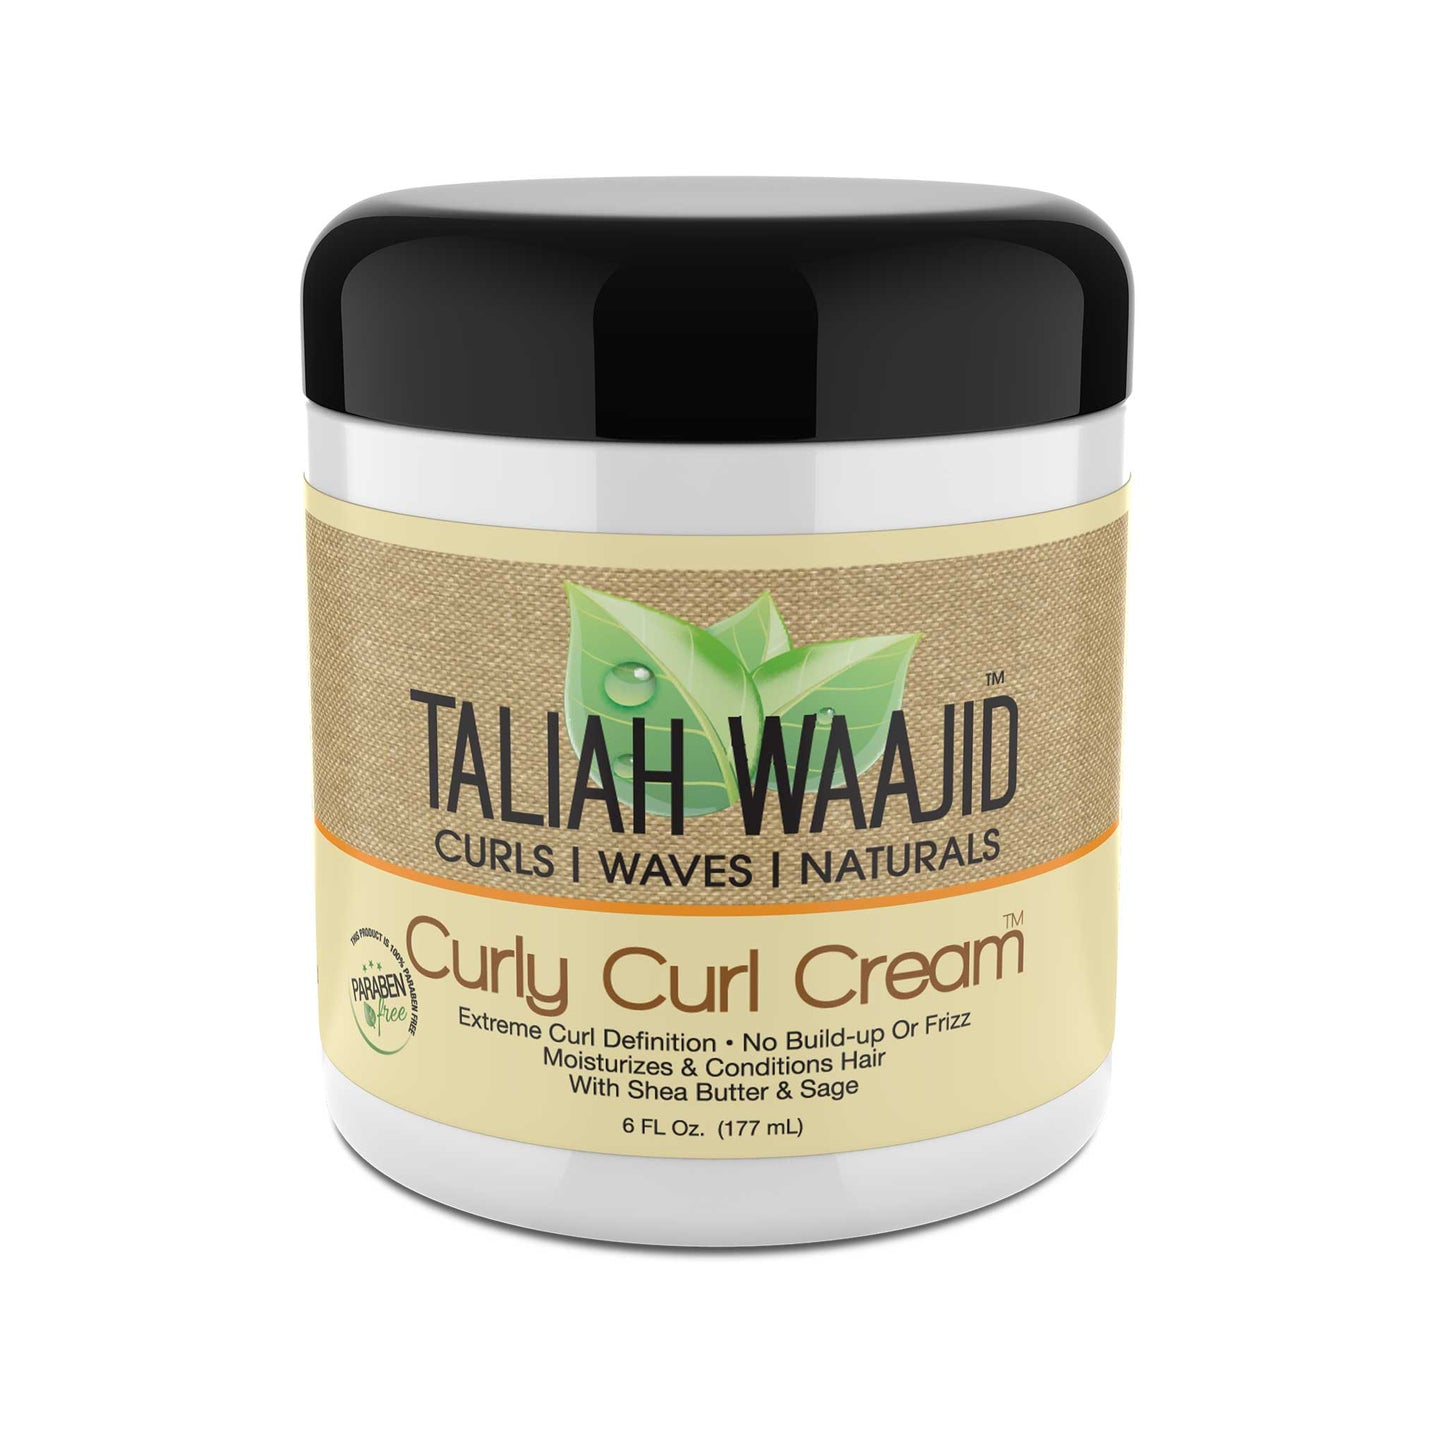 TWaajid Curly Curl Cream